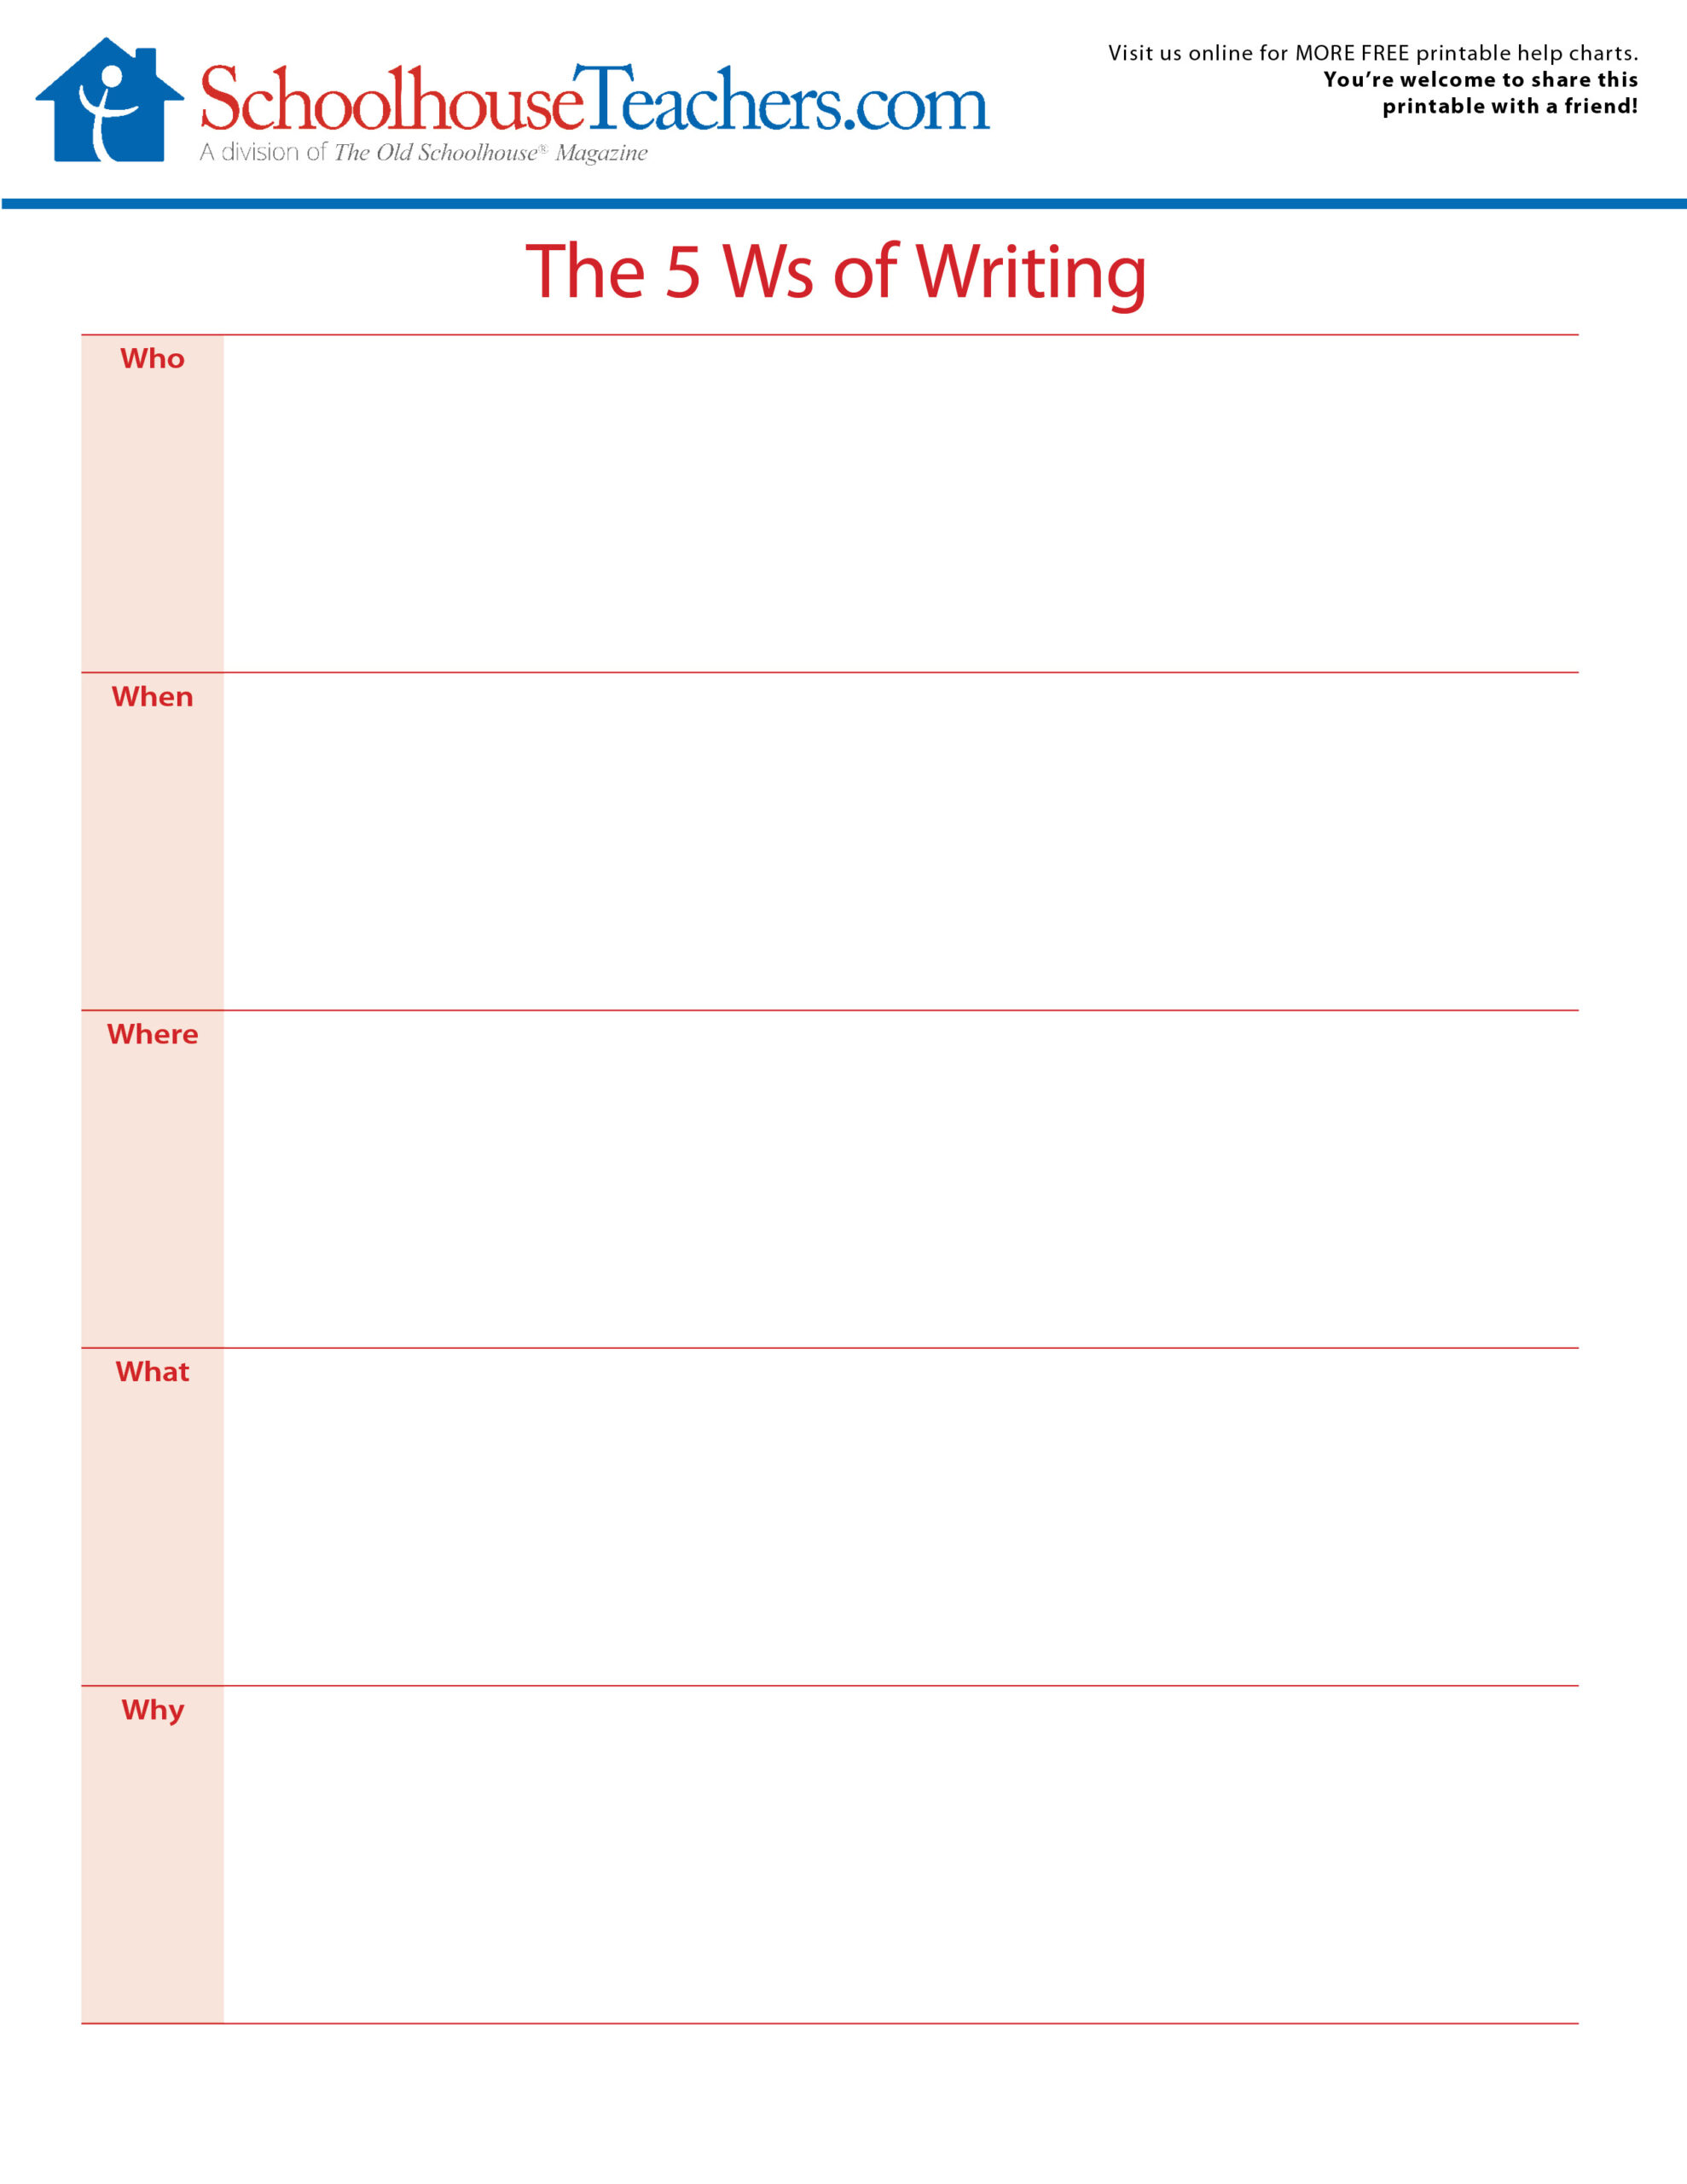 Free School Printable Worksheets 5 W s Of Creative Writing